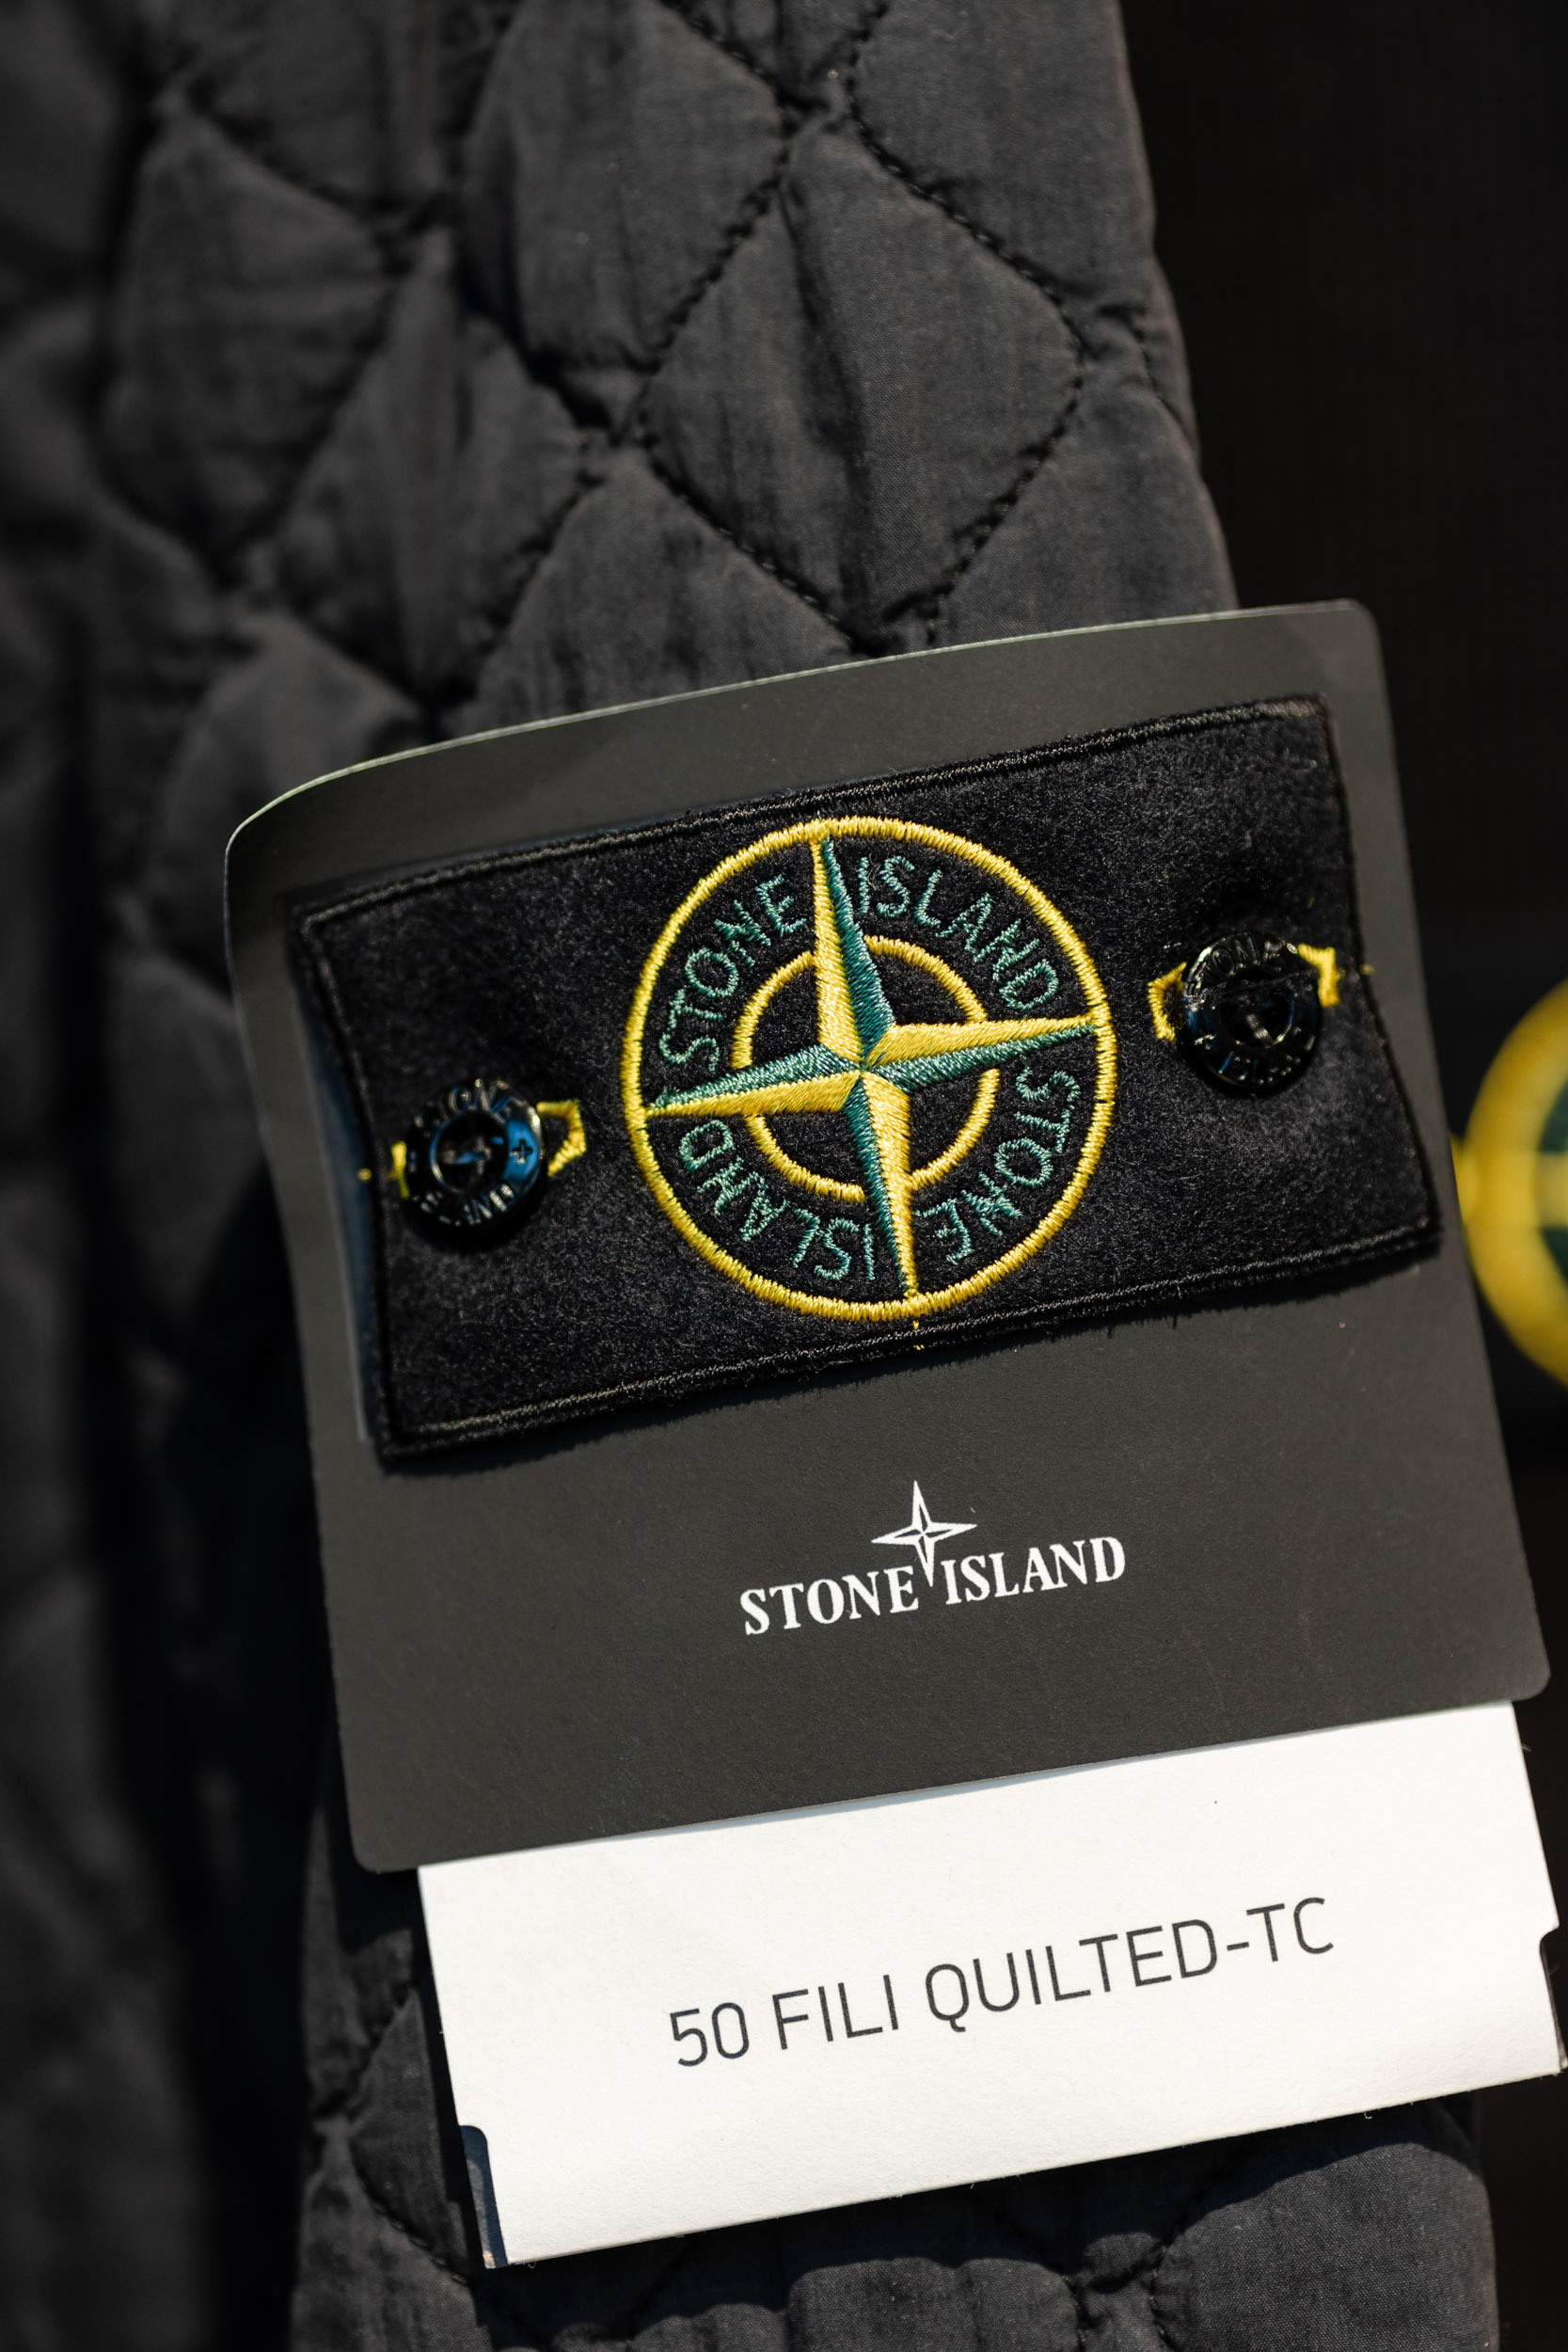 Jacket with a Stone Island logo.